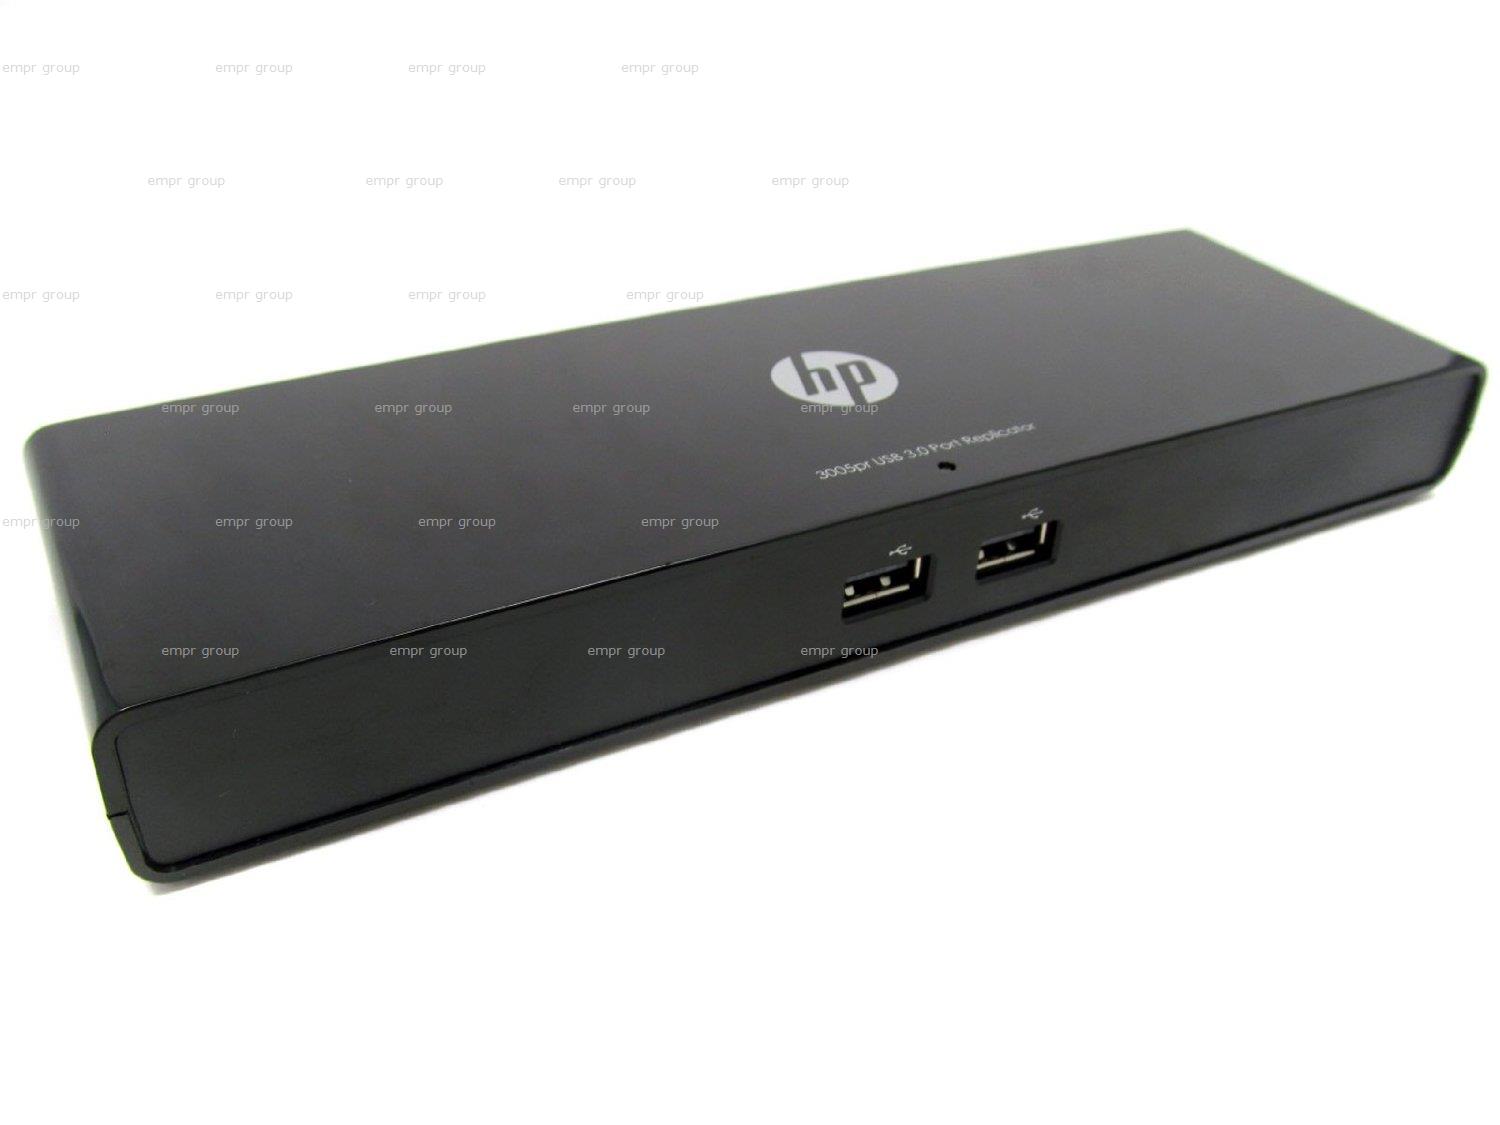 HP EliteBook 820 G1 Laptop (G8C37PP) Port Replicator 690650-001